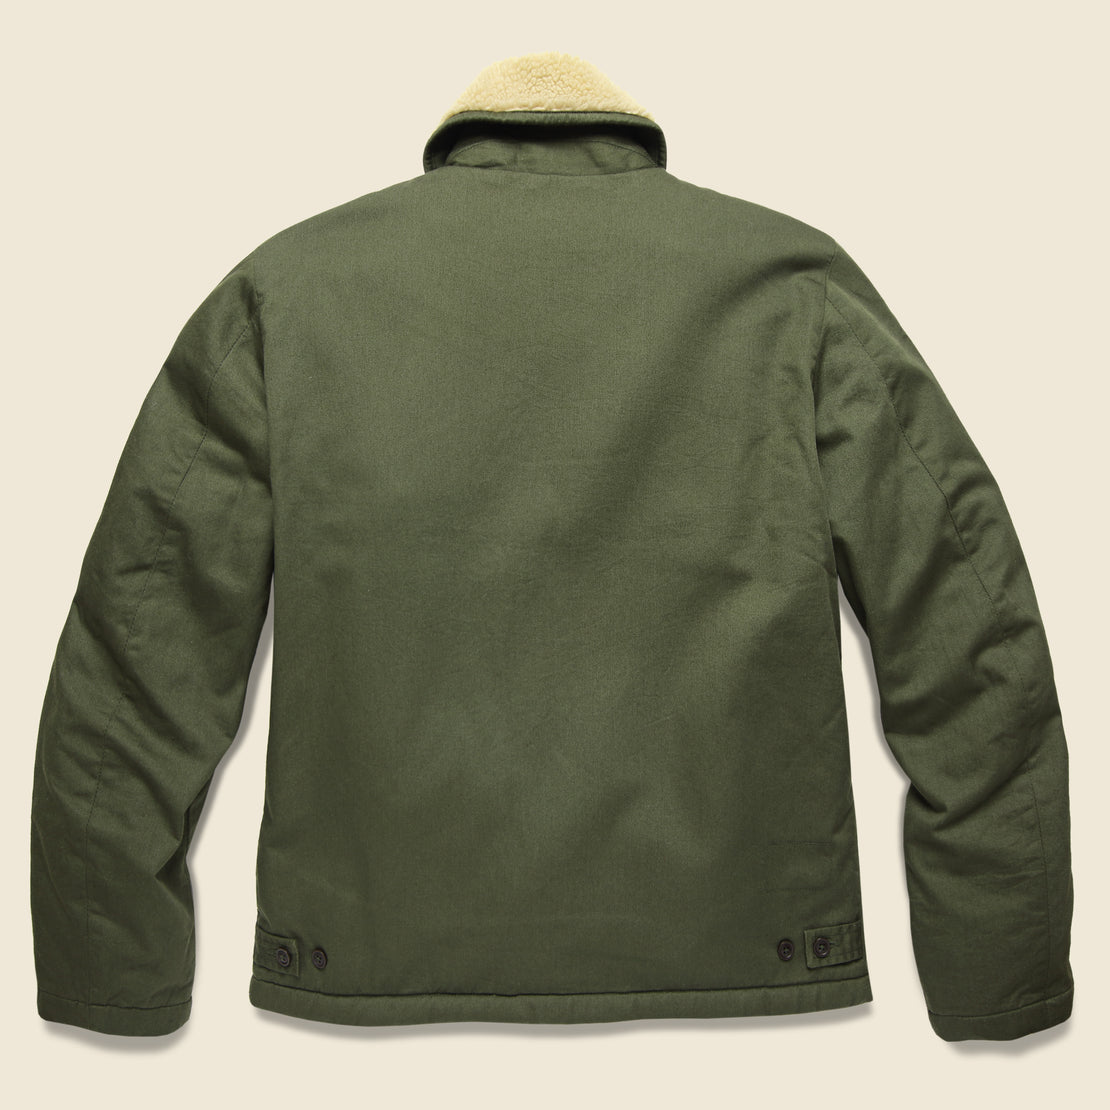 N1 Jacket - Military Olive